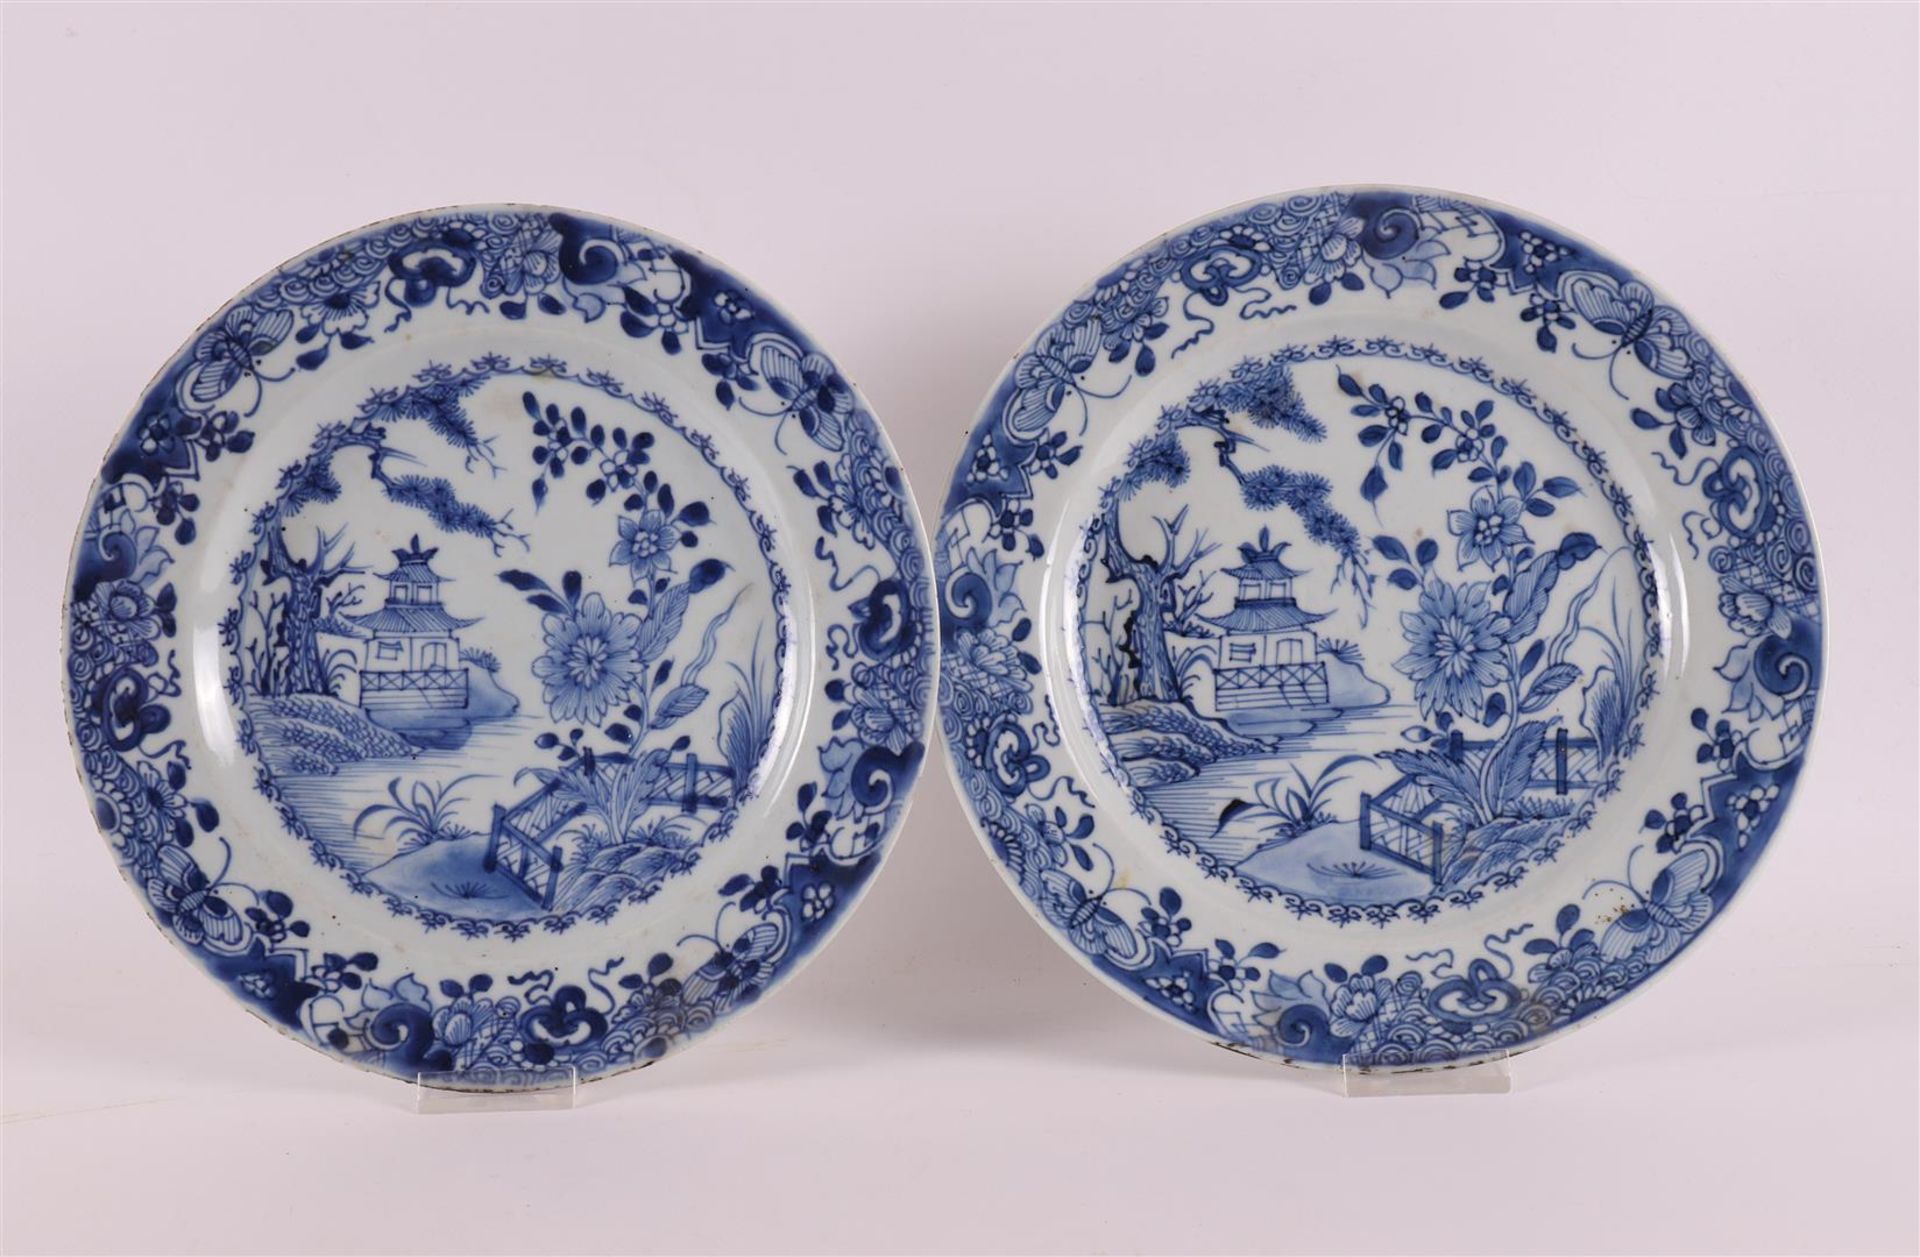 A pair of blue and white porcelain plates, China, Qianlong, 18th century. Blue underglaze decoration